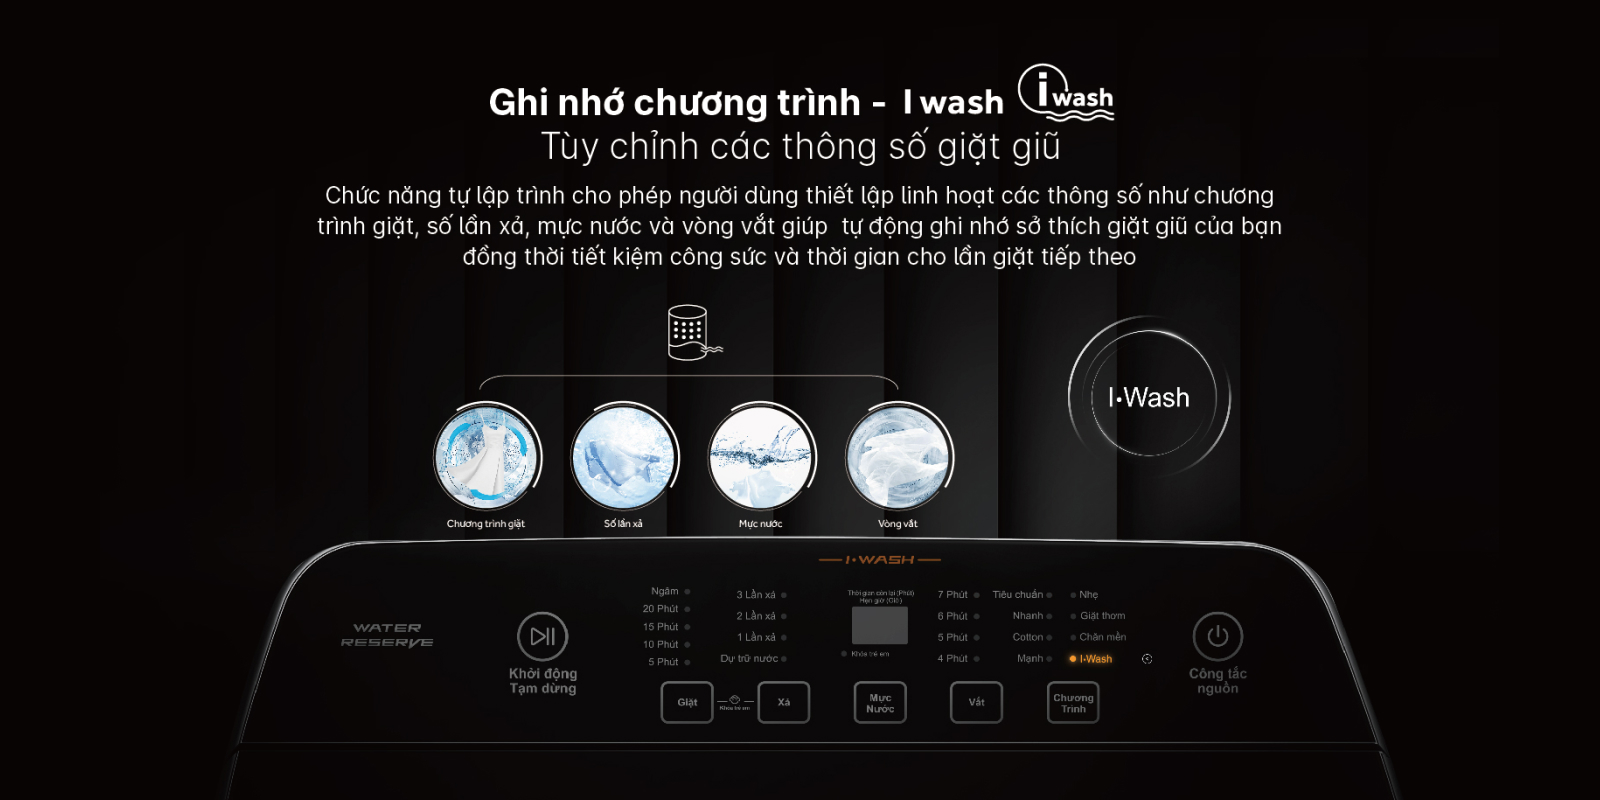 Ghi nho chuong trinh - I wash